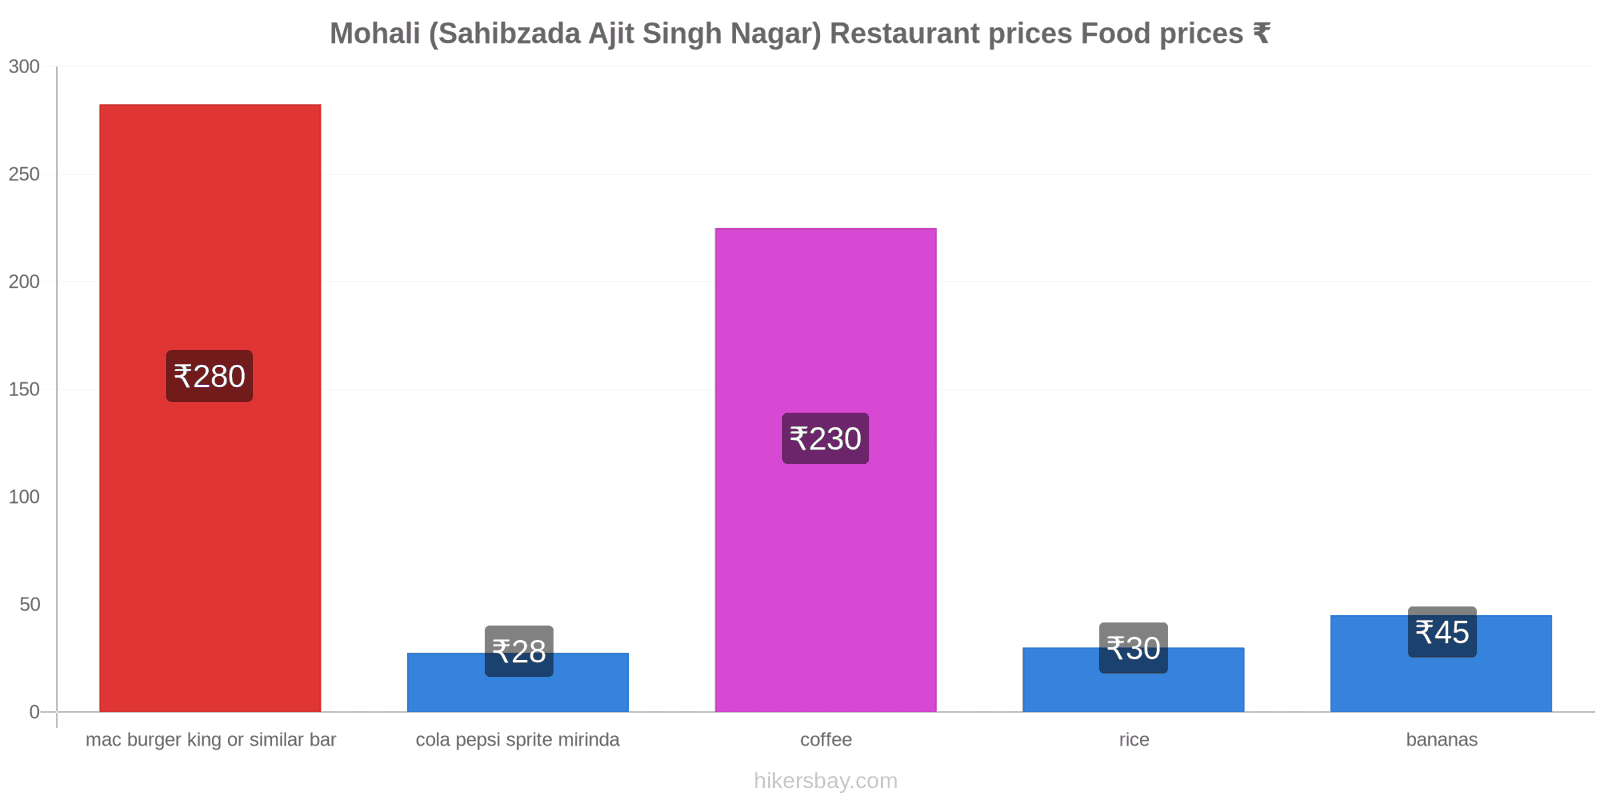 Mohali (Sahibzada Ajit Singh Nagar) price changes hikersbay.com